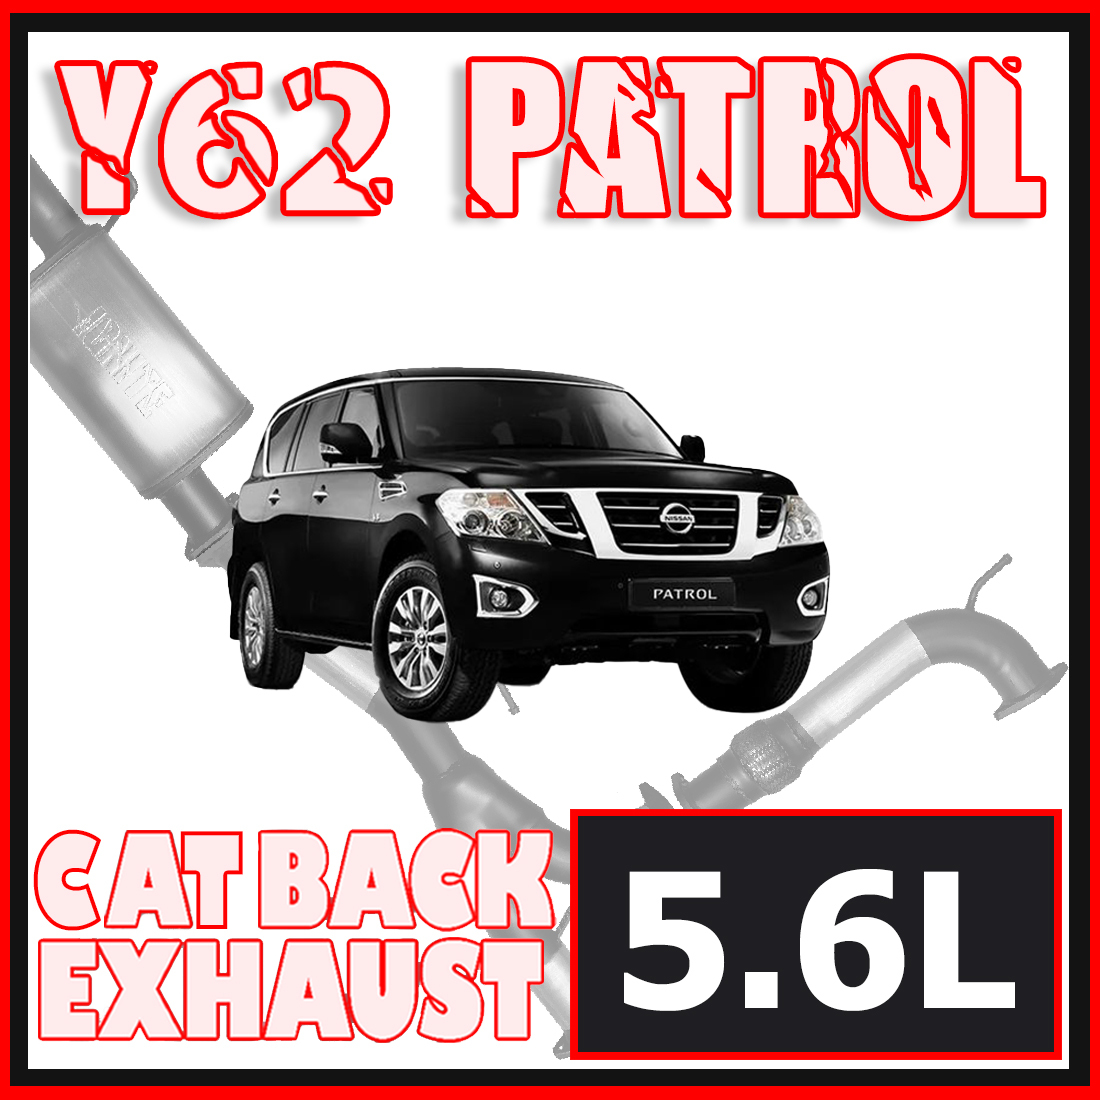 Nissan Y62 Patrol SUV 5.6L Ignite Exhaust image